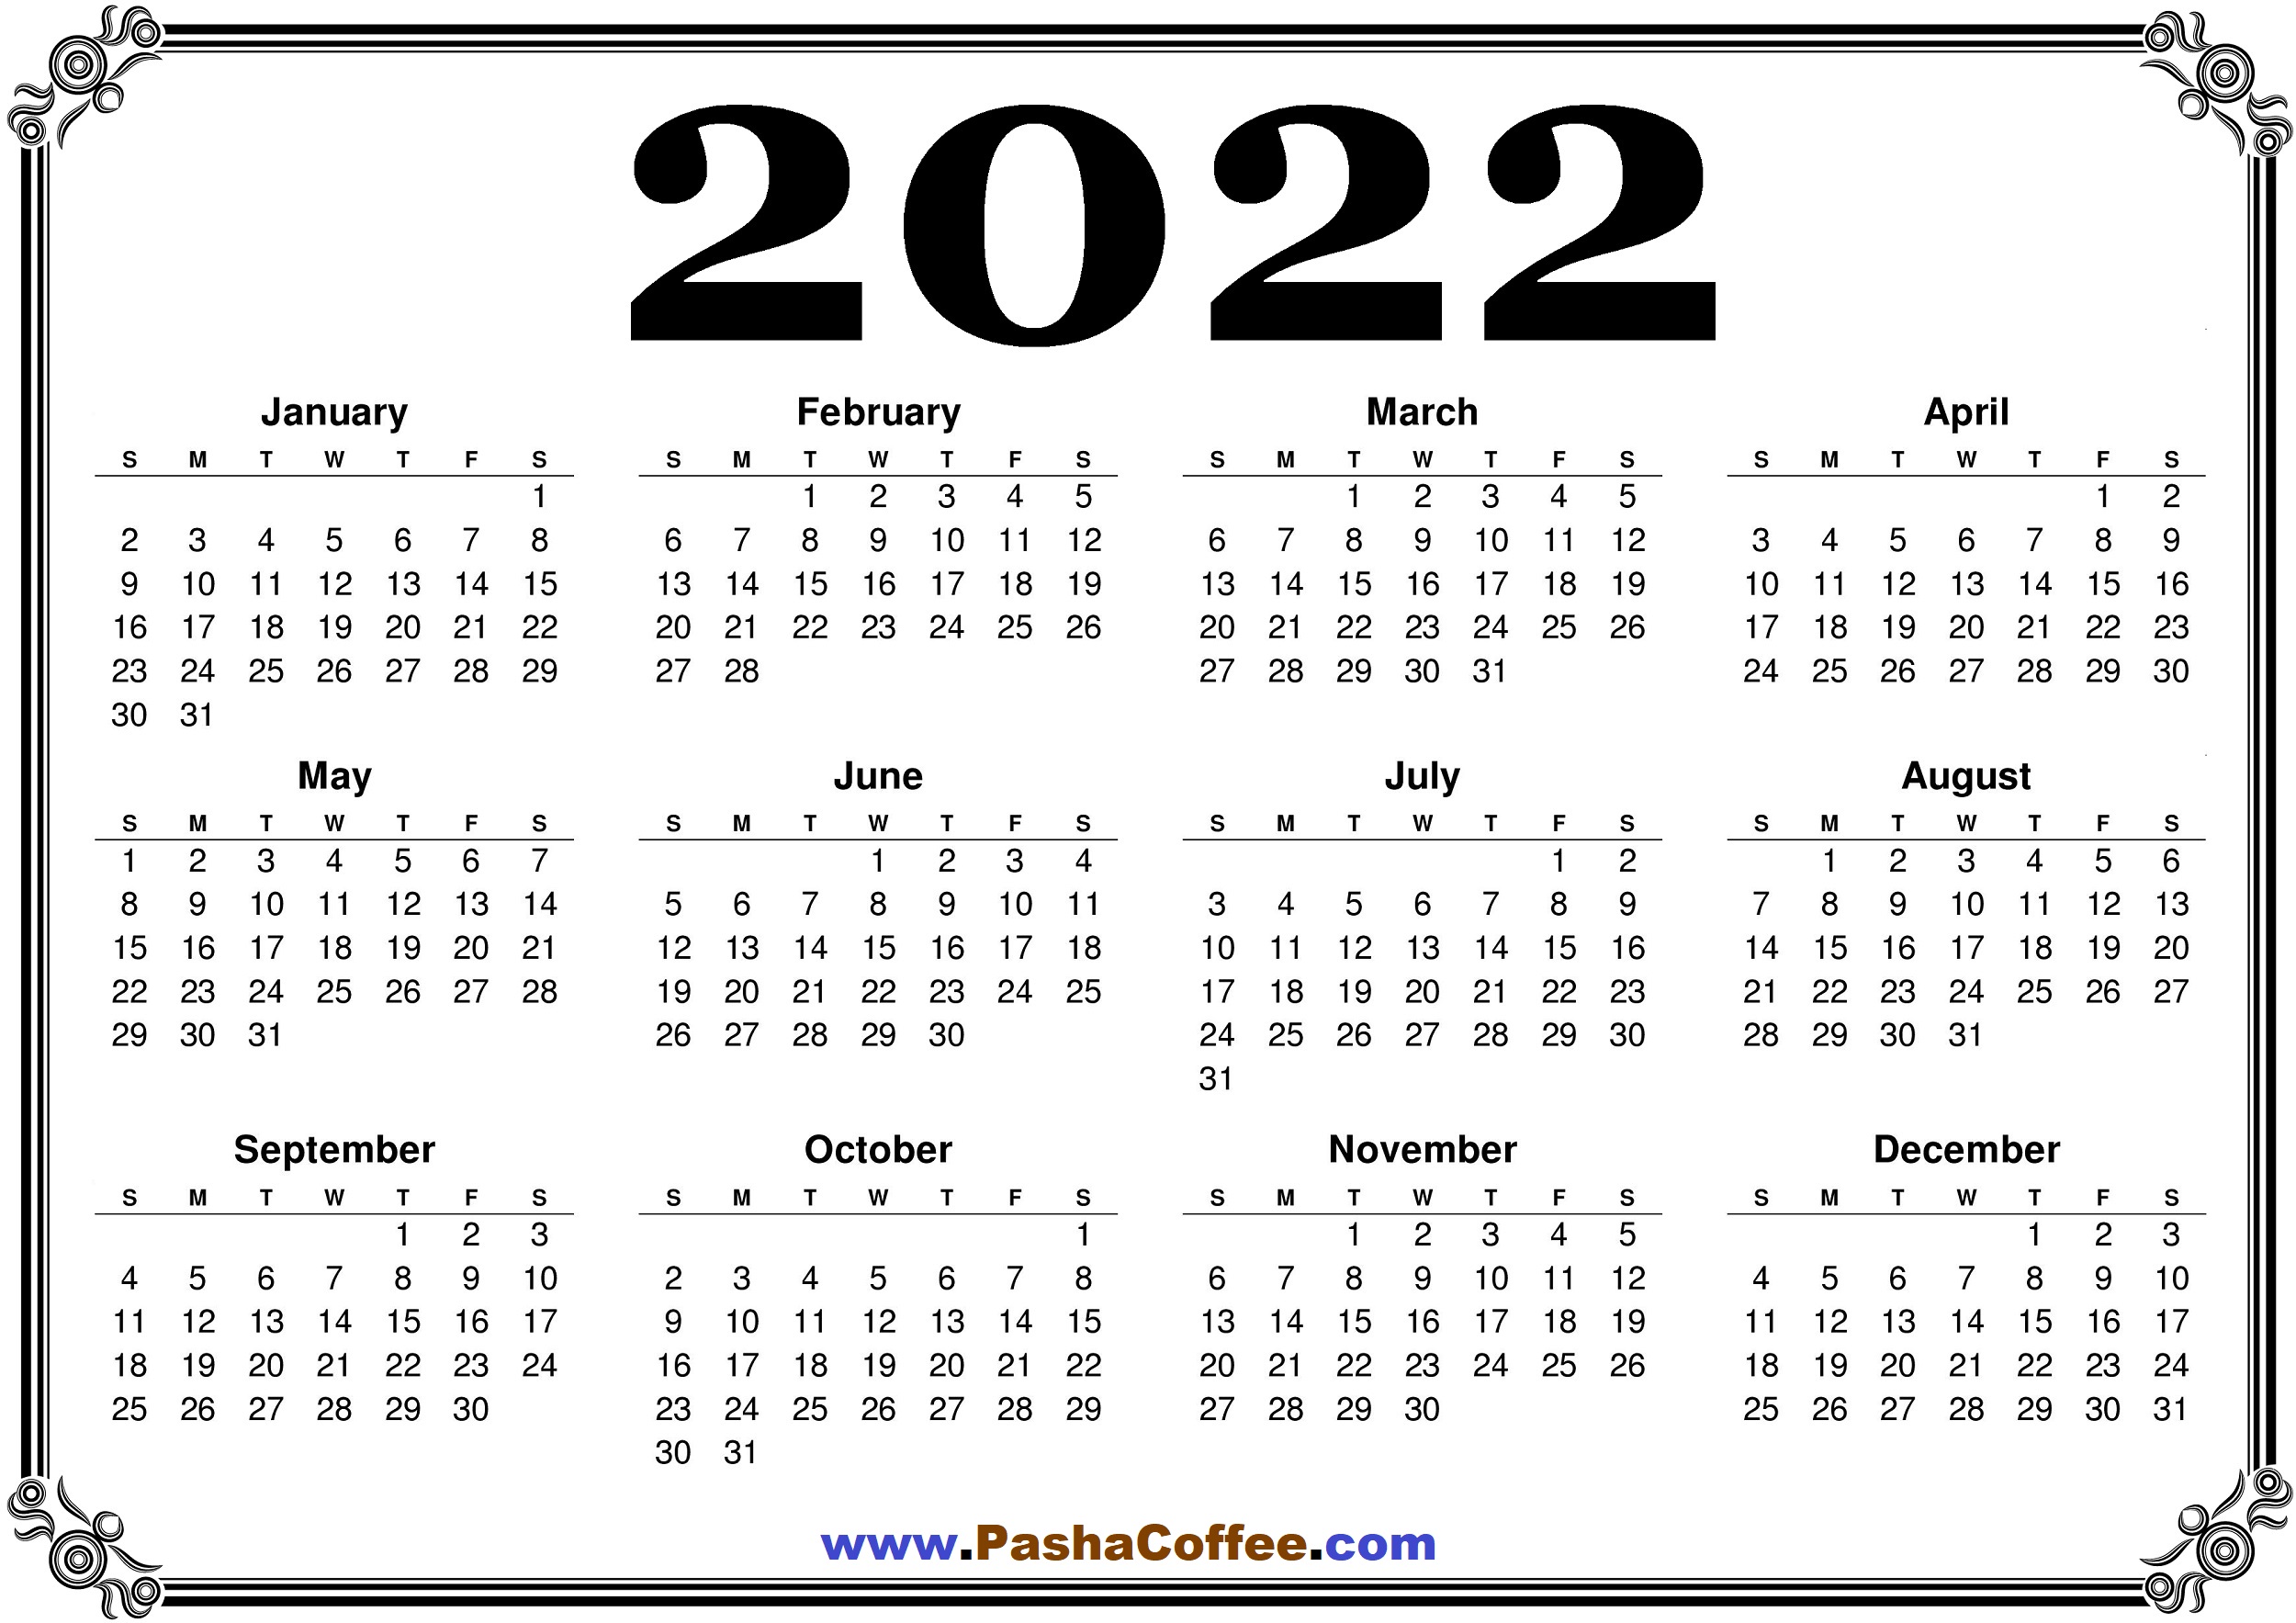 Free Downloadable Calendar 2022 Us 2022 Calendar Free Printable A4 Size – Pashacoffee.com